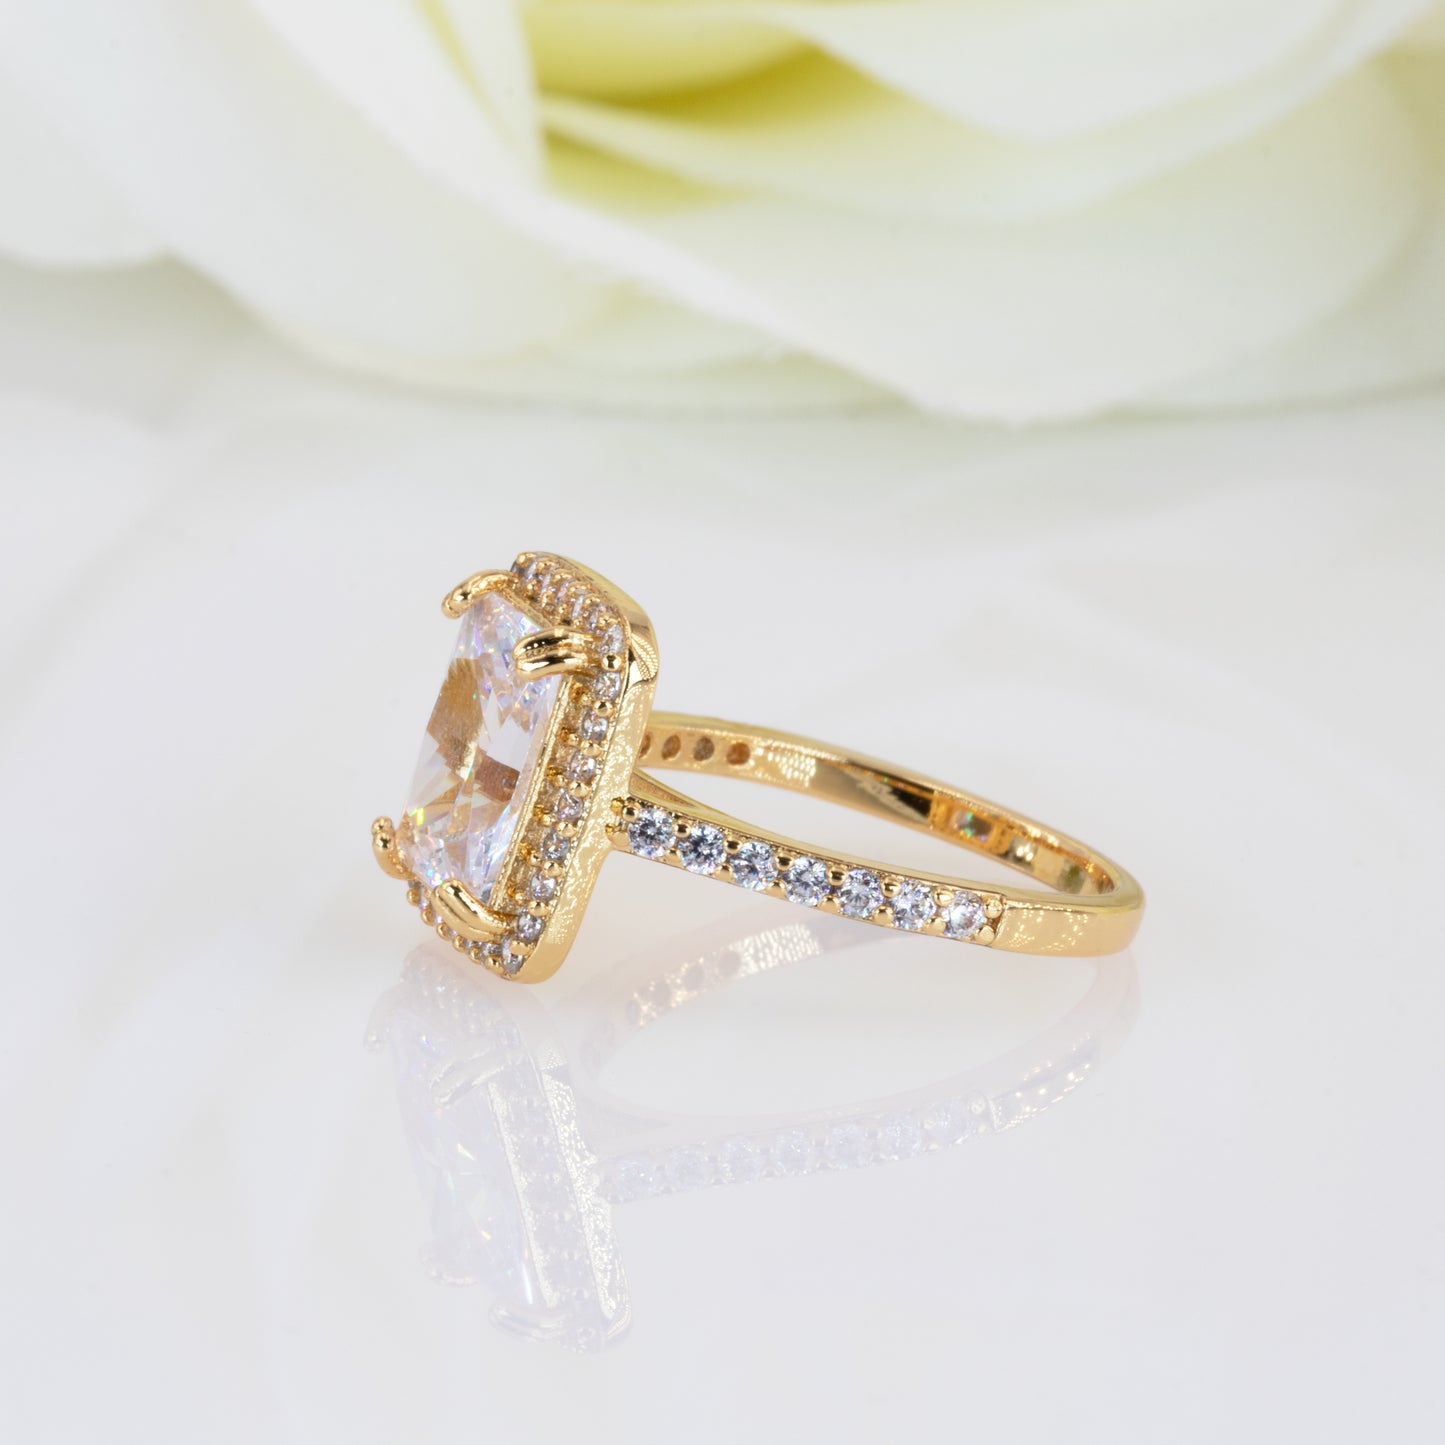 Engagement Ring For Women